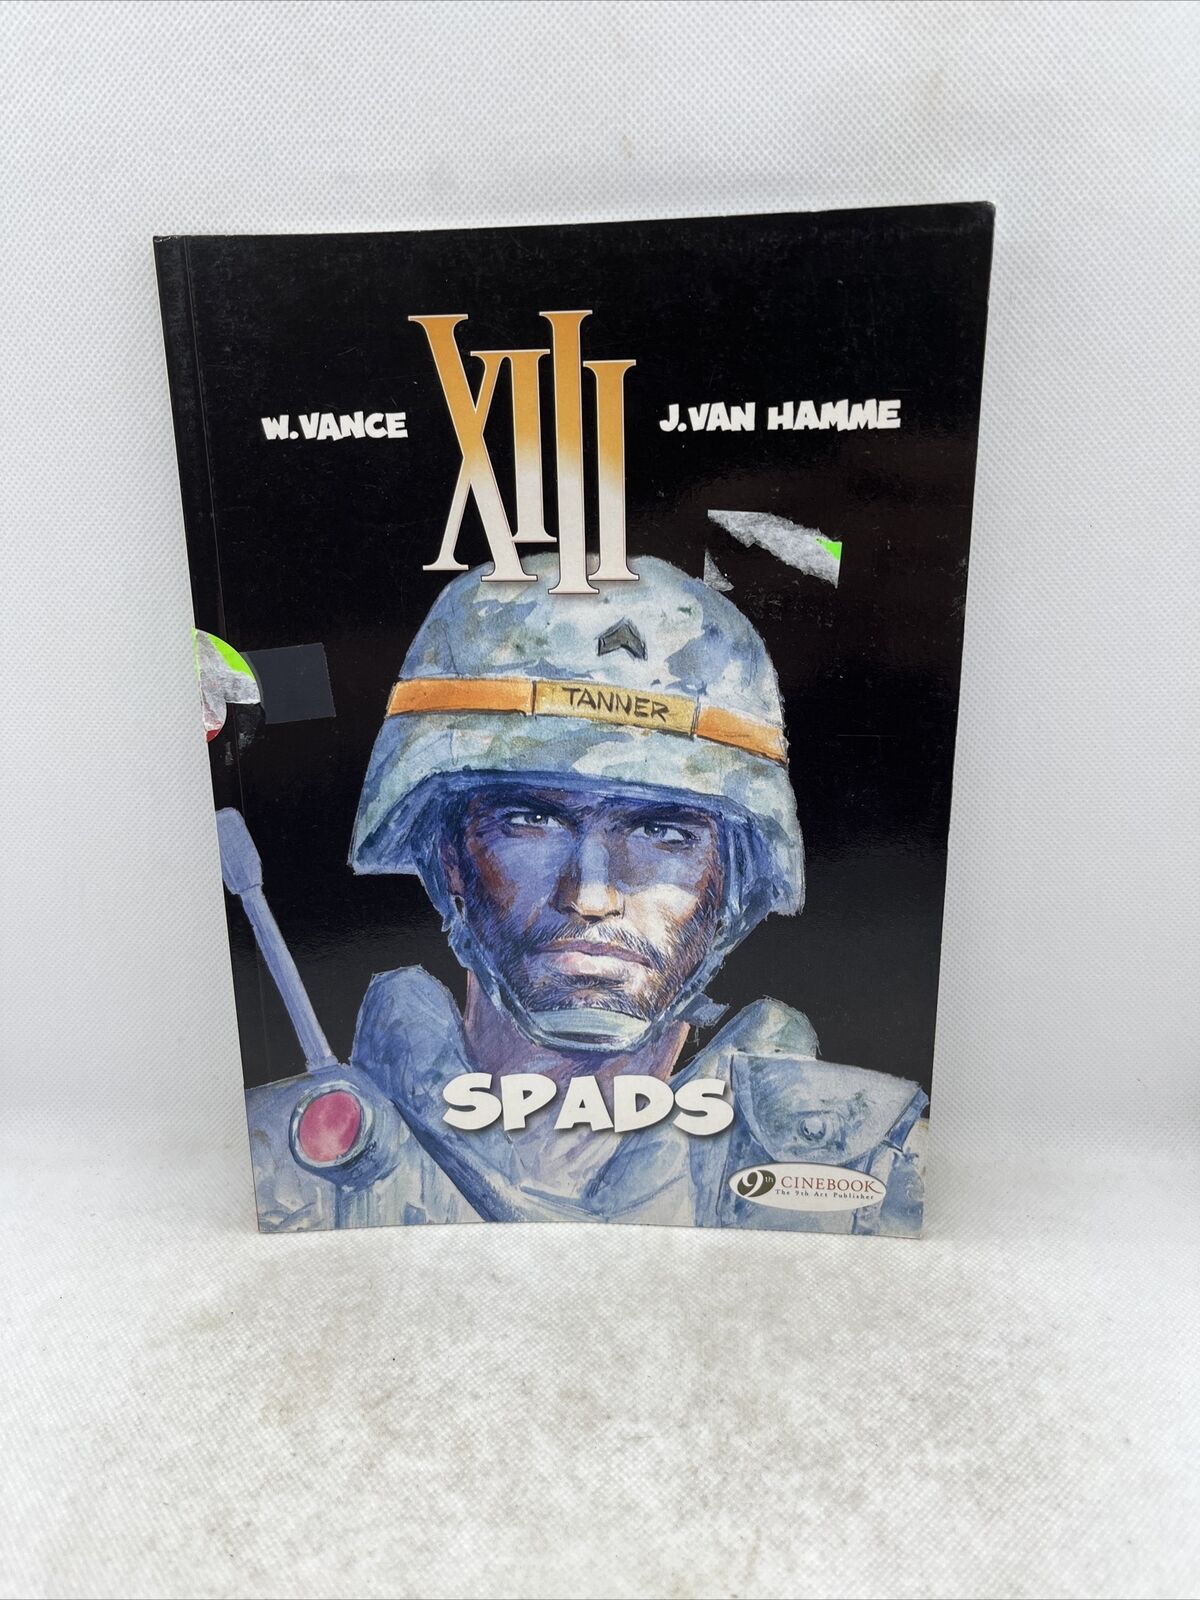 XIII #4 Spads Cinebook, November 2010 Graphic Novel 